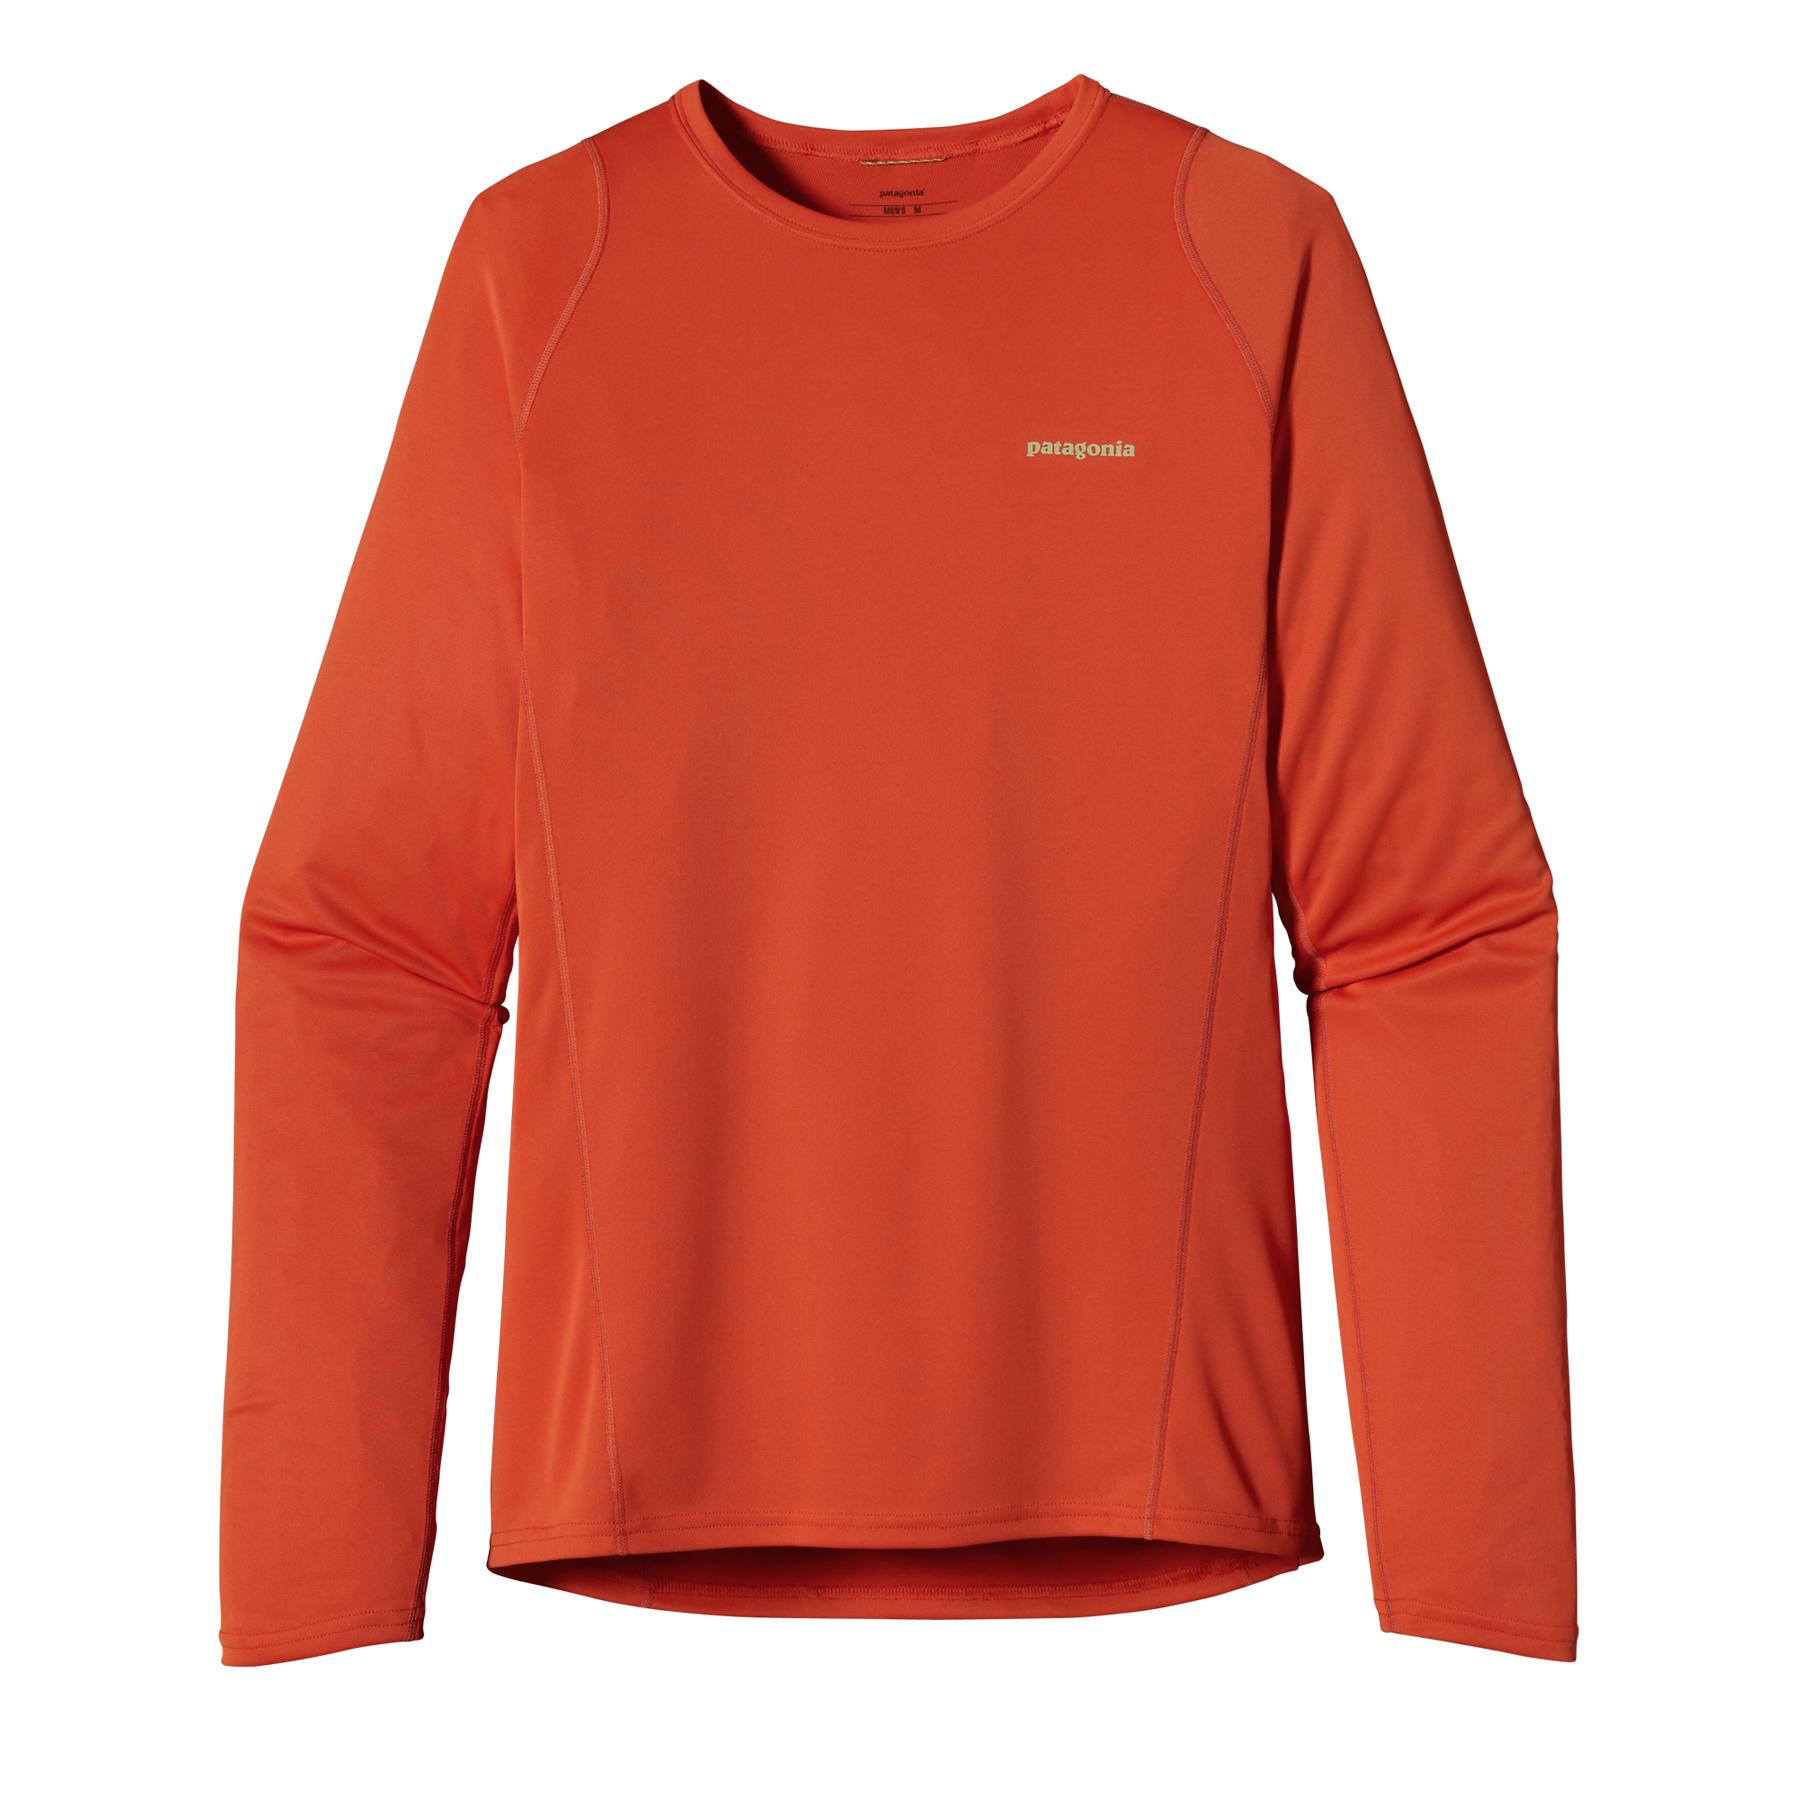 Foto Patagonia L/S Fore Runner Shirt Men Eclectic Orange (Modell 2013/2014) foto 935964